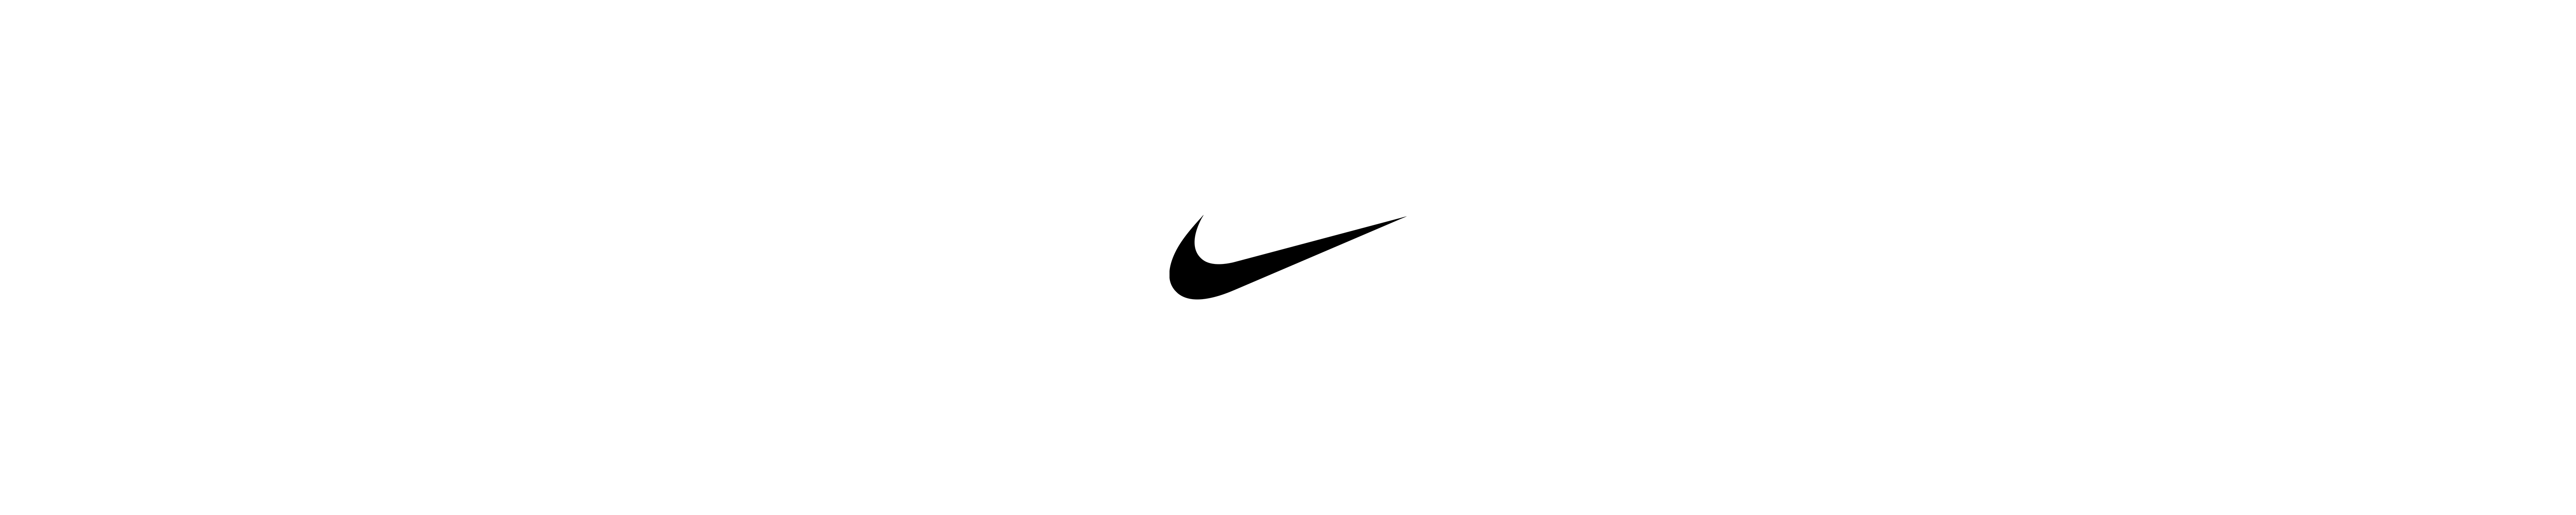 Who Does Nike Sponsor? | Crepslocker